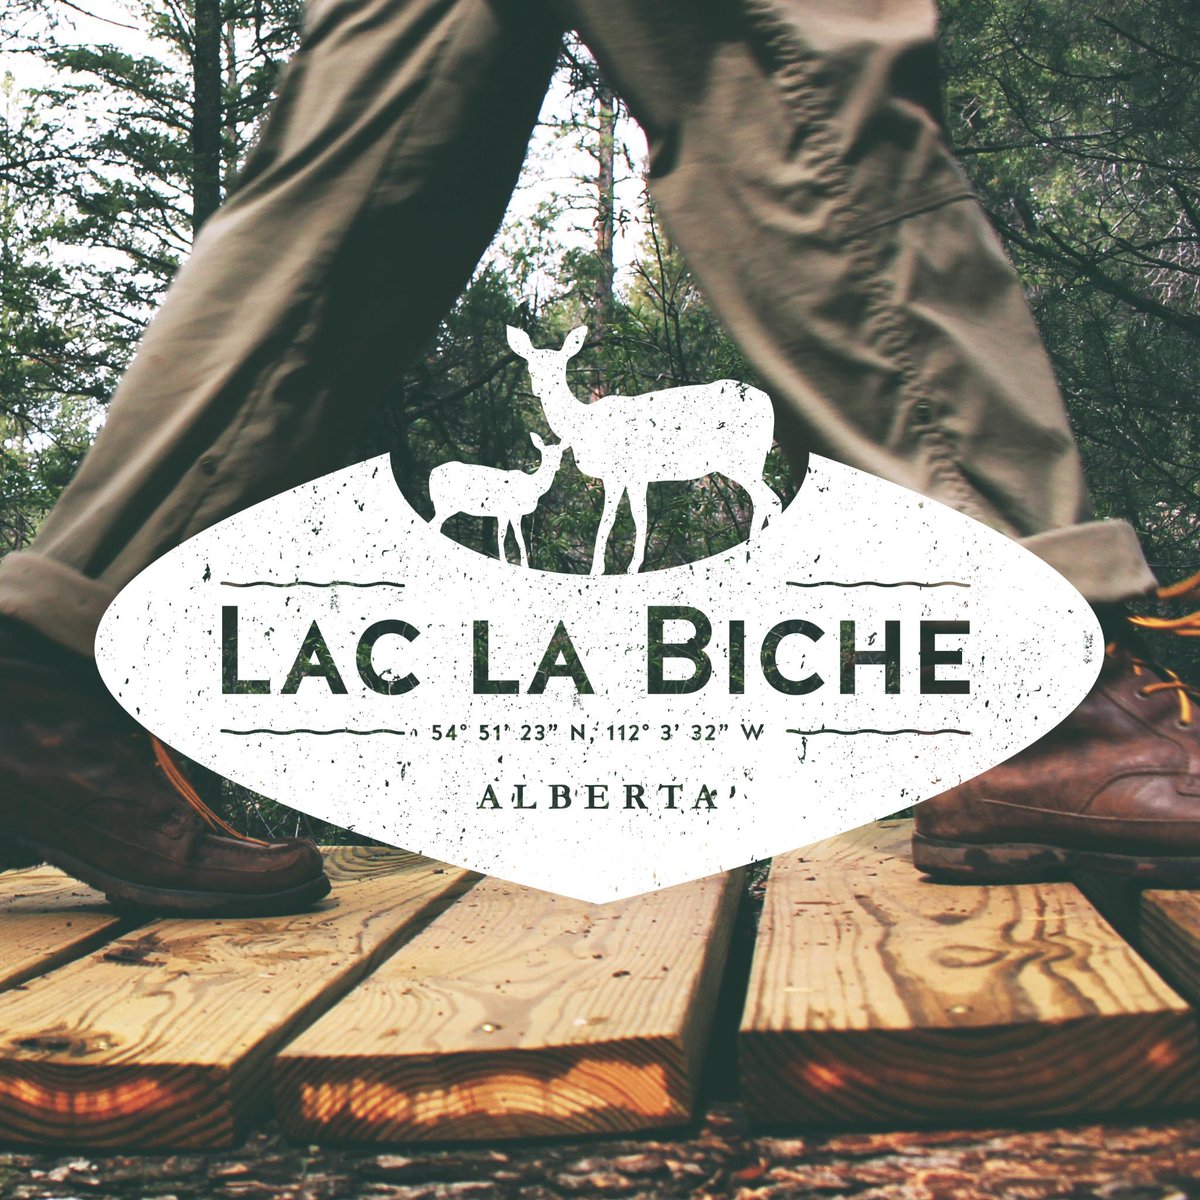 Lac la Biche, Alberta. #lakesofalbertalogoproject #femaledeer #alberta #logos #design